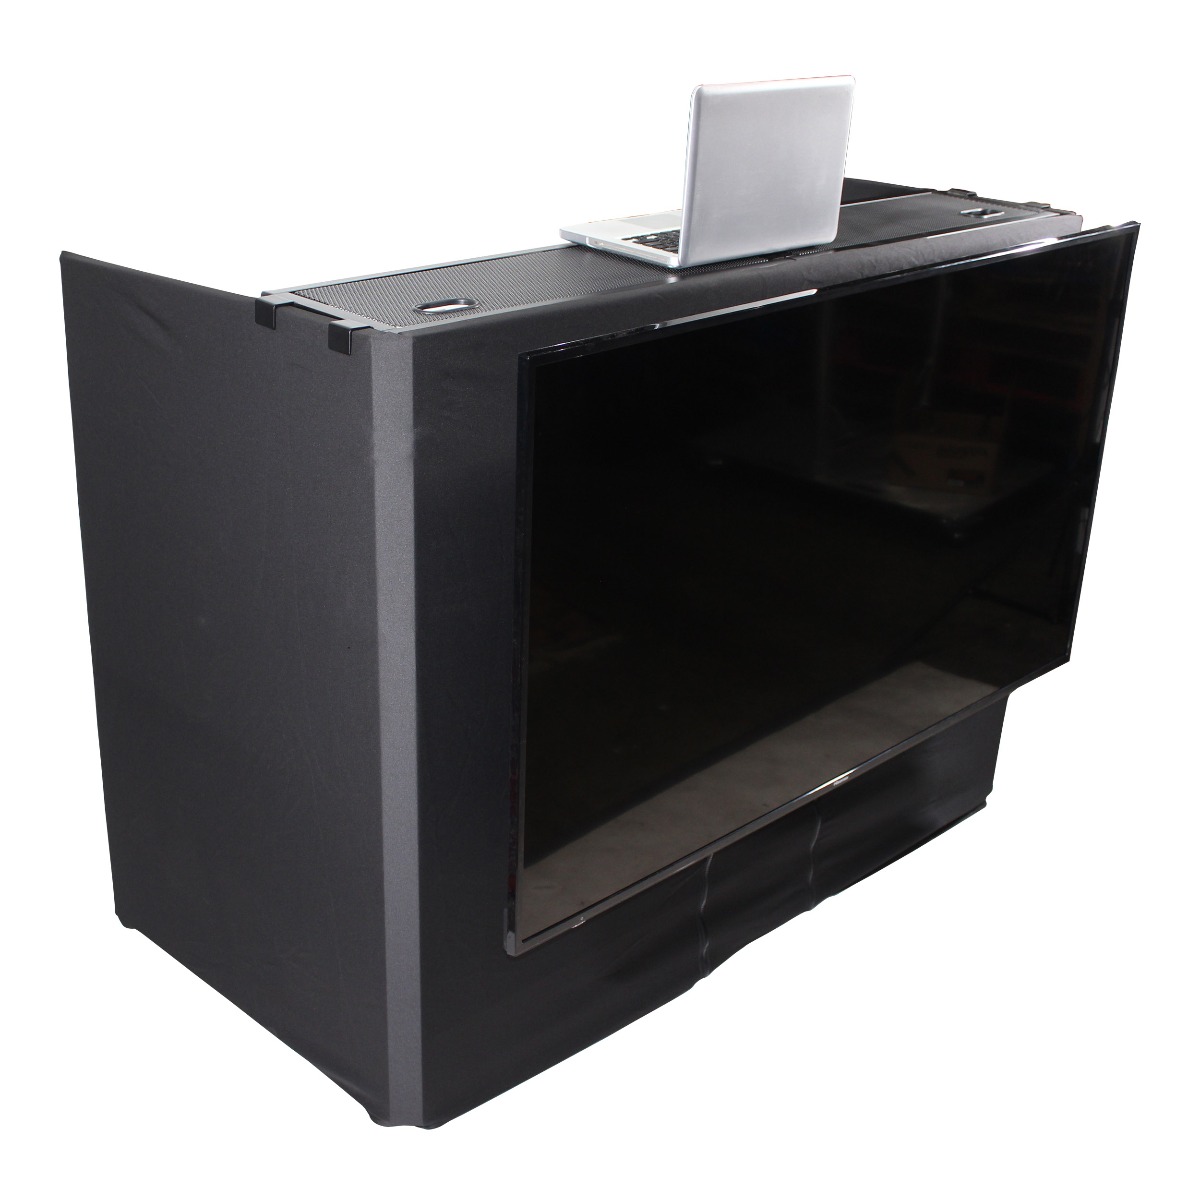 ProX XF-MESA MEDIA MK2- DJ Facade Table Workstation